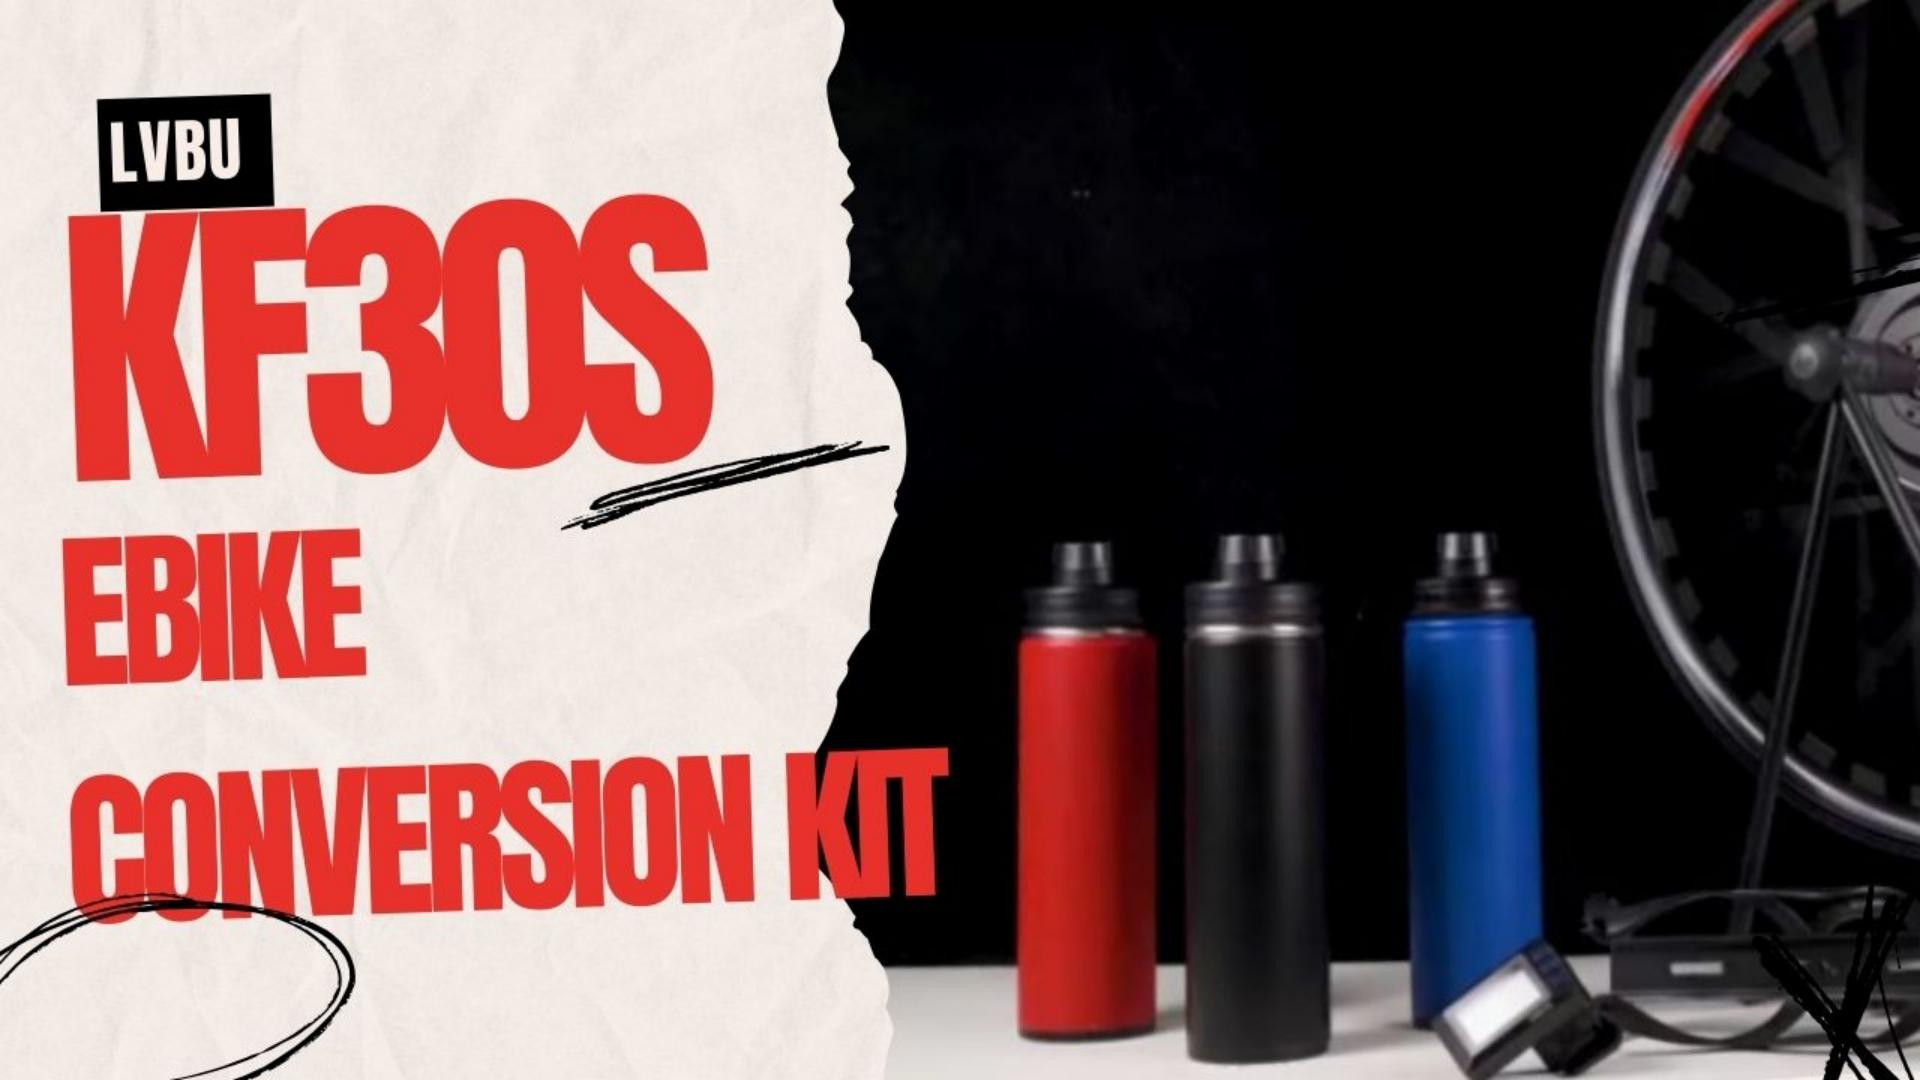 KF30S Ebike Conversion Kit// Uncover the untold secrets of conversion kit